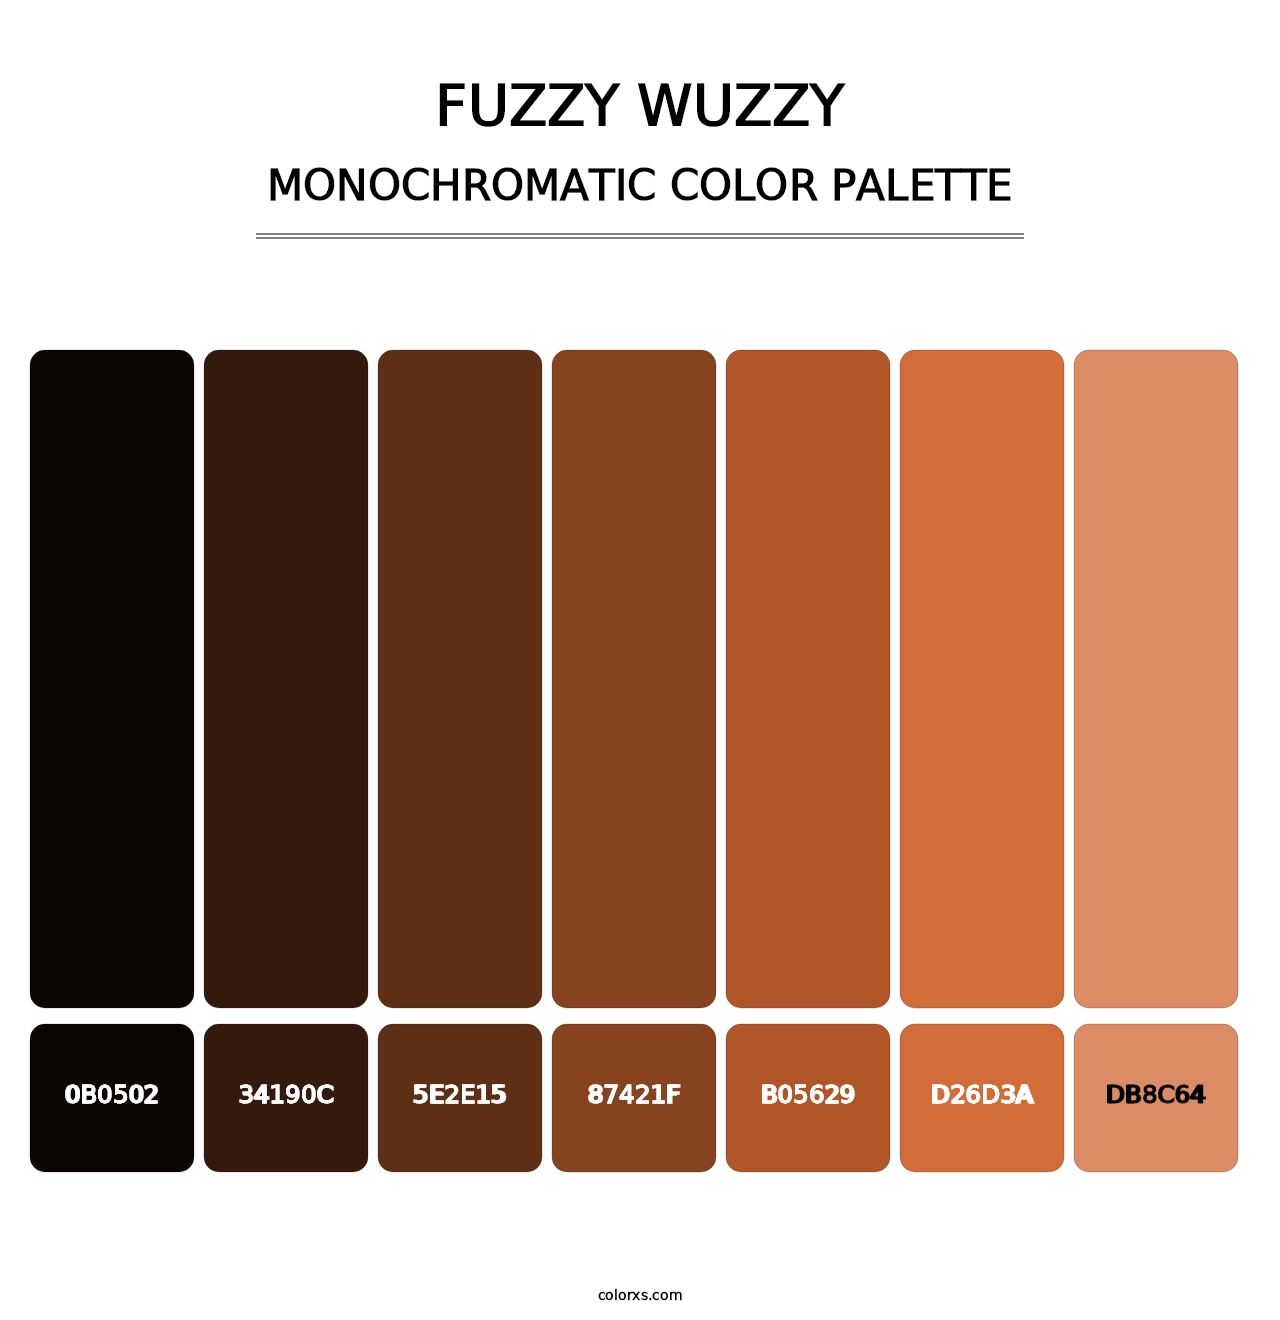 Fuzzy Wuzzy - Monochromatic Color Palette